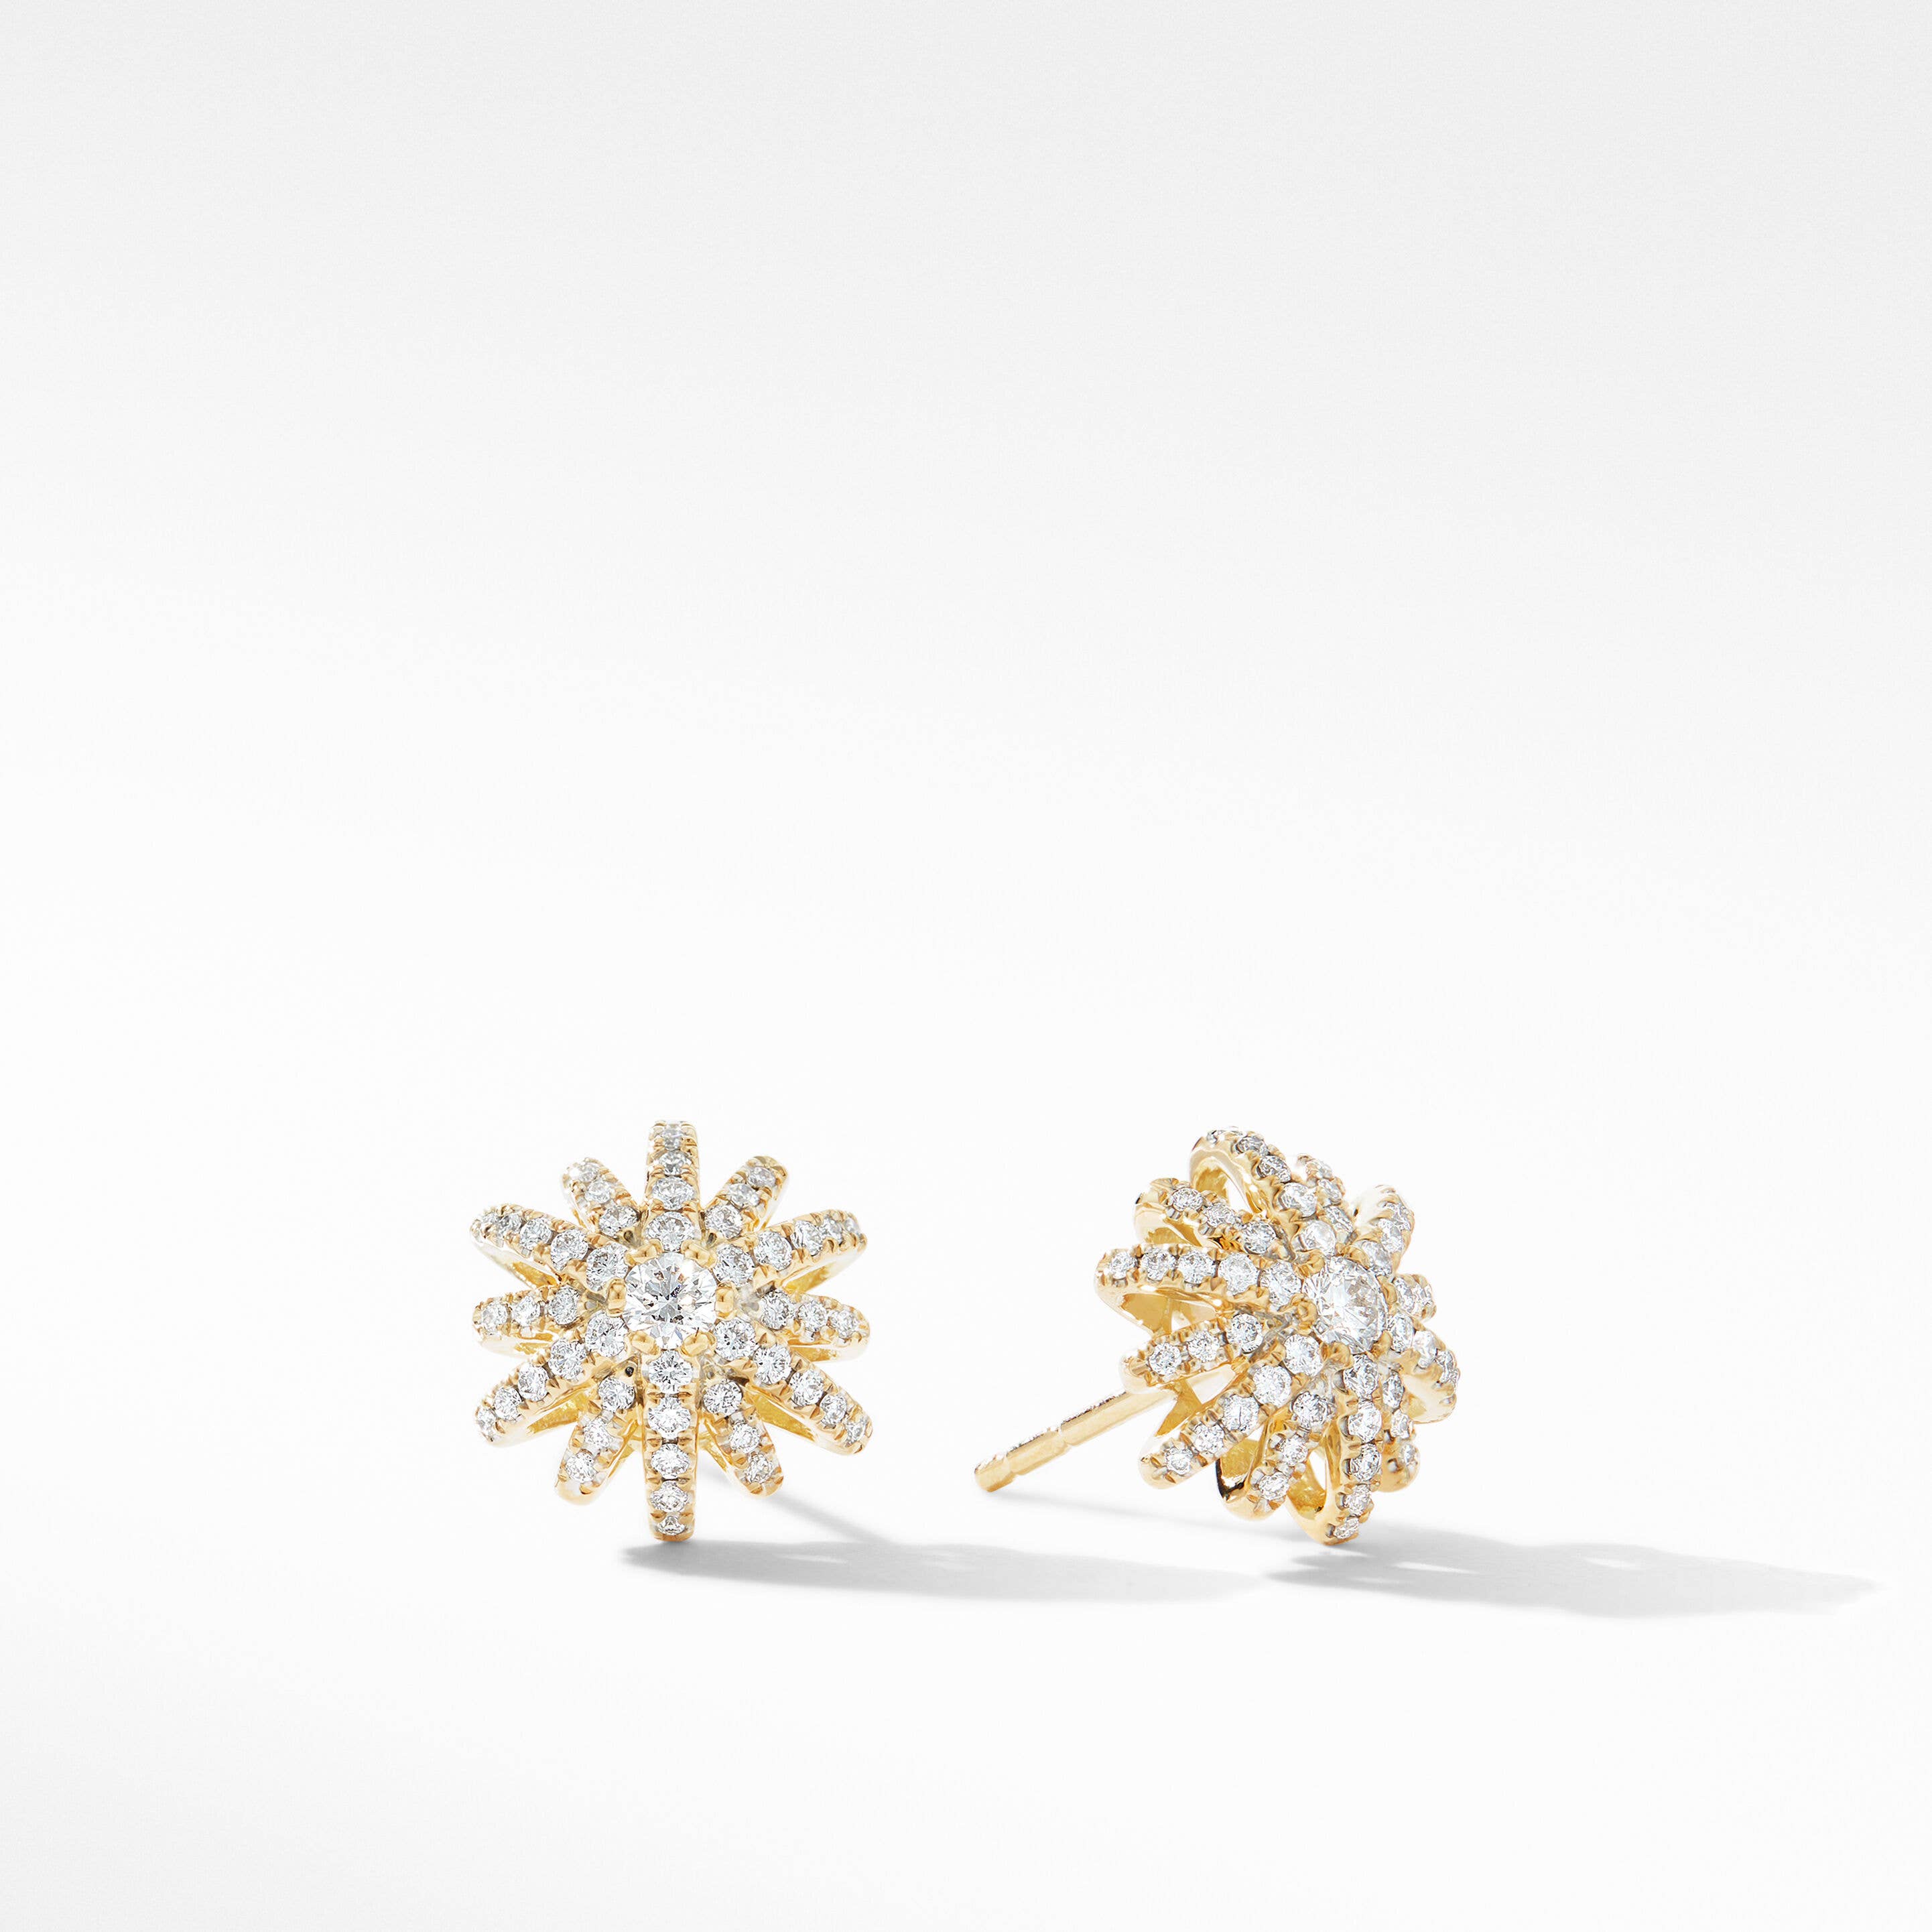 Starburst Stud Earrings in 18K Yellow Gold with Full Pavé Diamonds